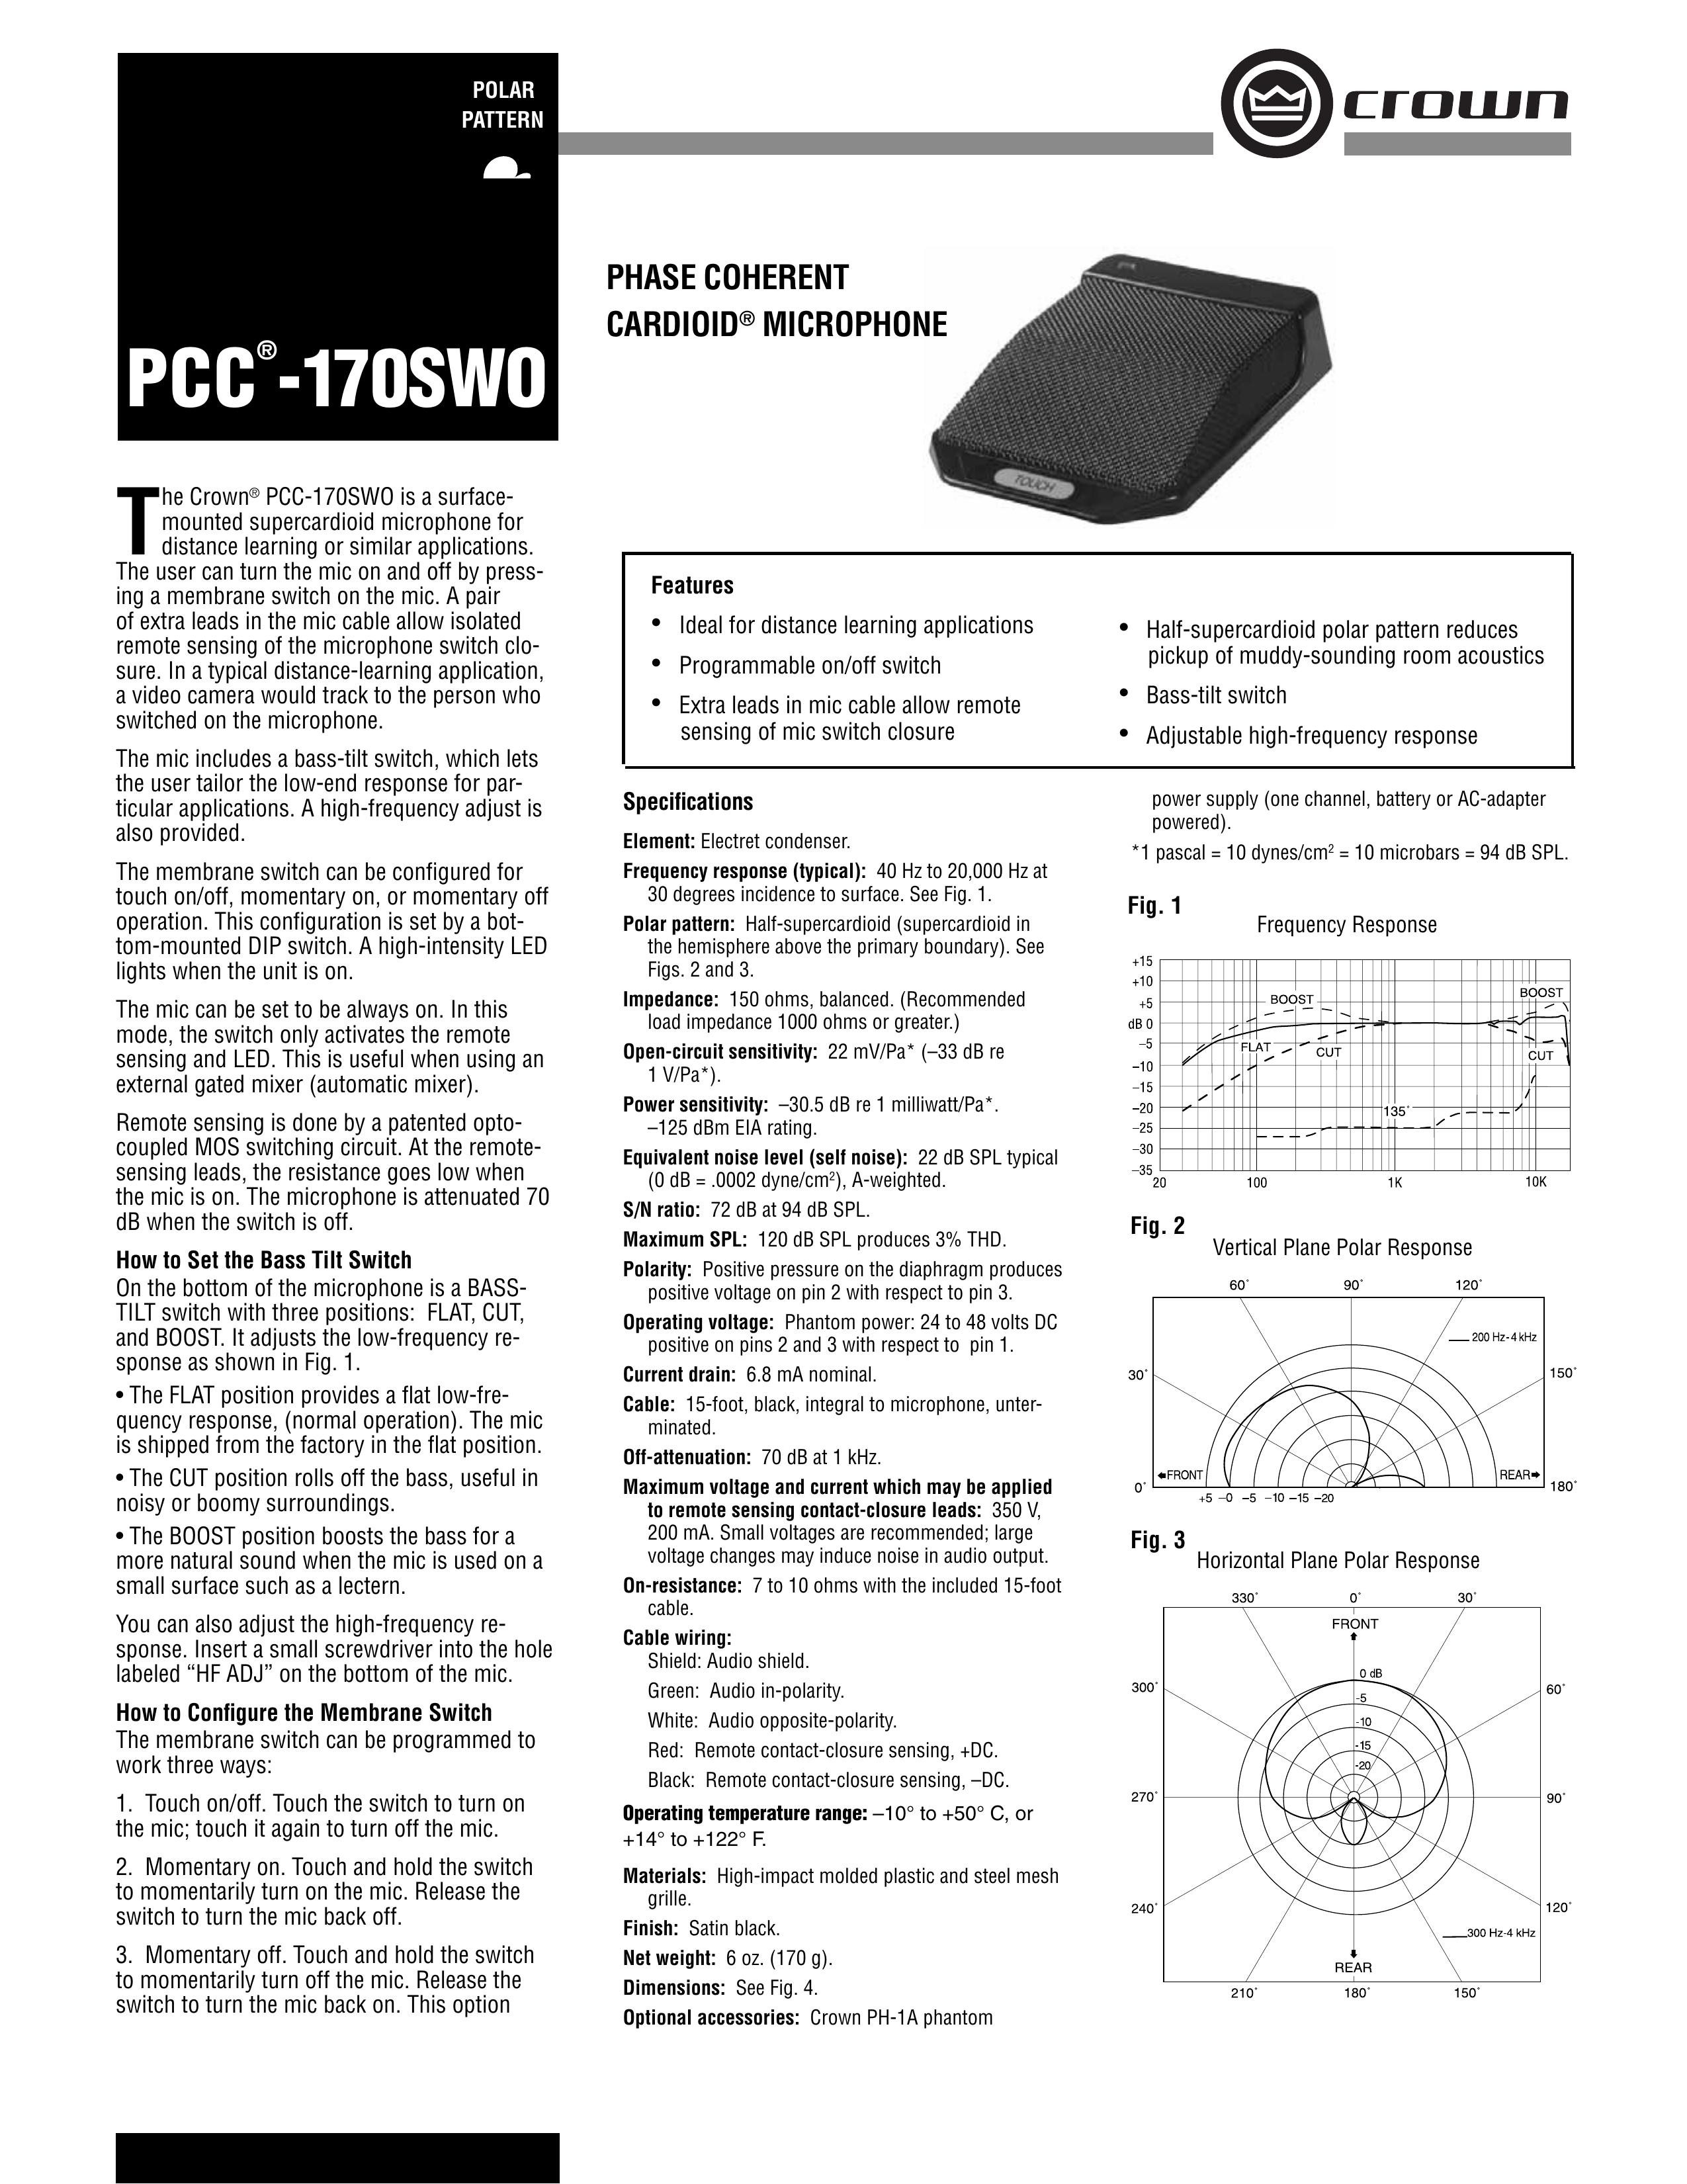 Crown Audio PCC-170SWO Microphone User Manual